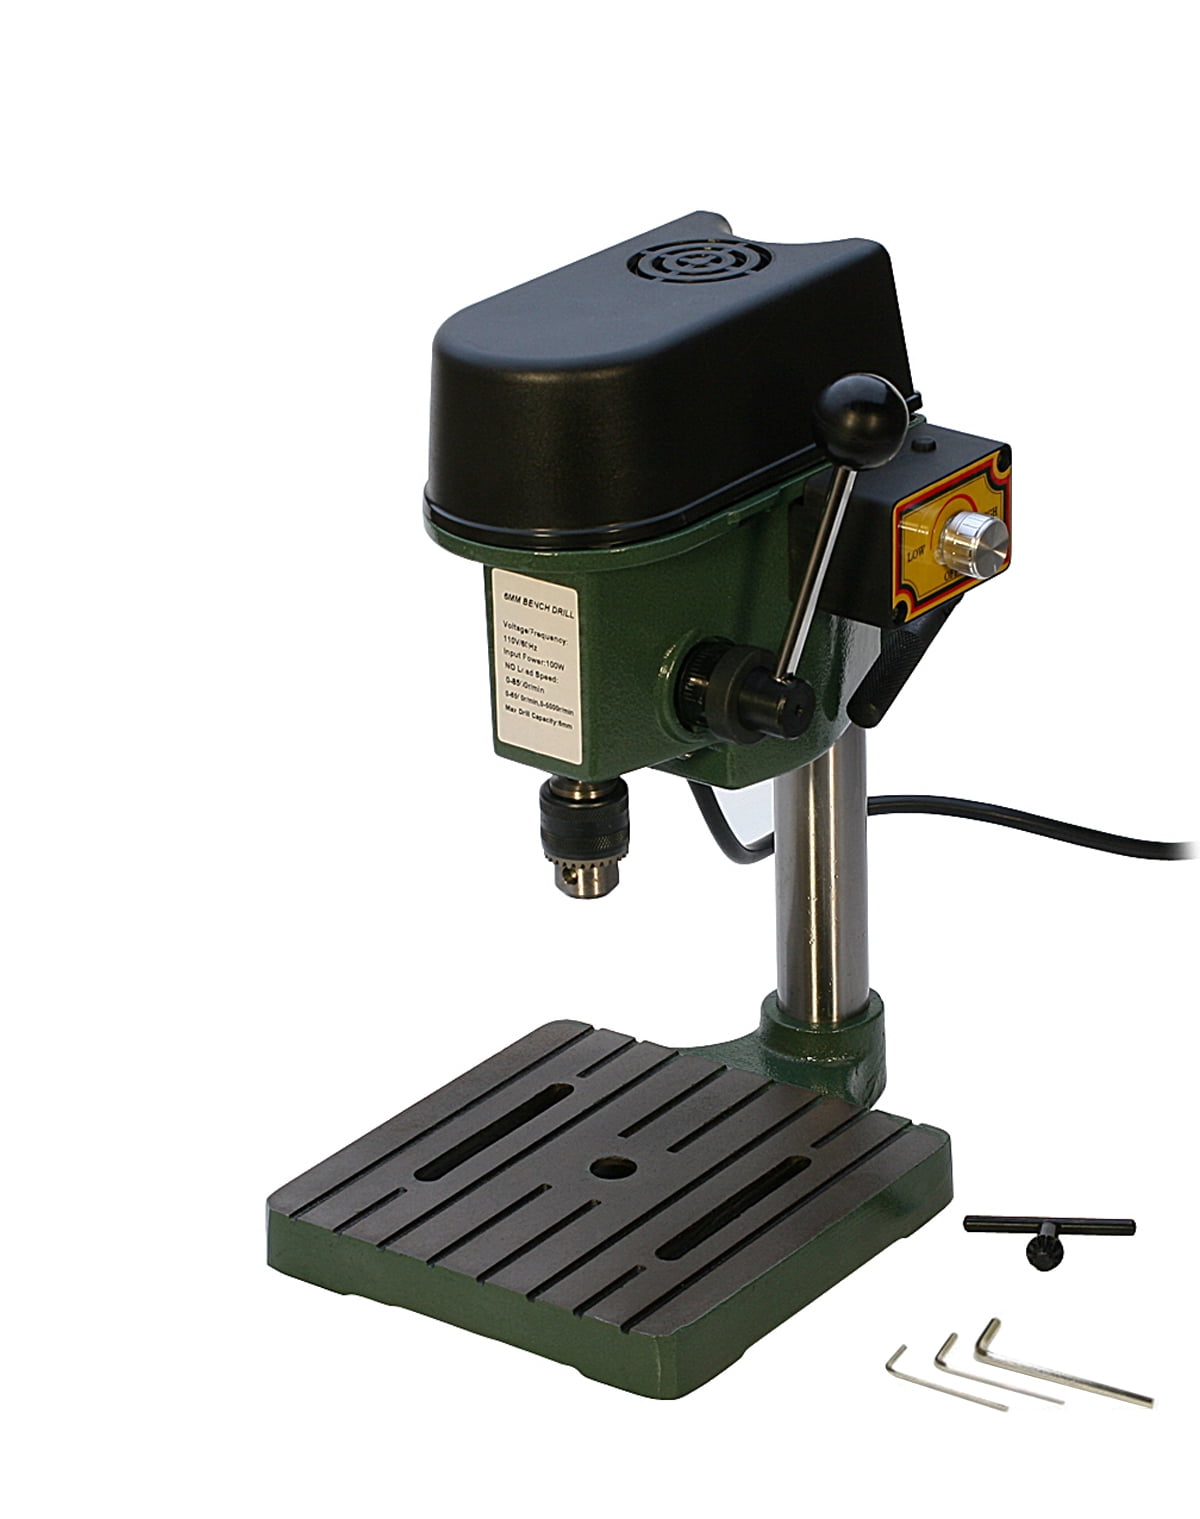 Mini Drill Press Compact Drill Presses Bench Jeweler Hobby 3-Speeds Max 8500 RPM